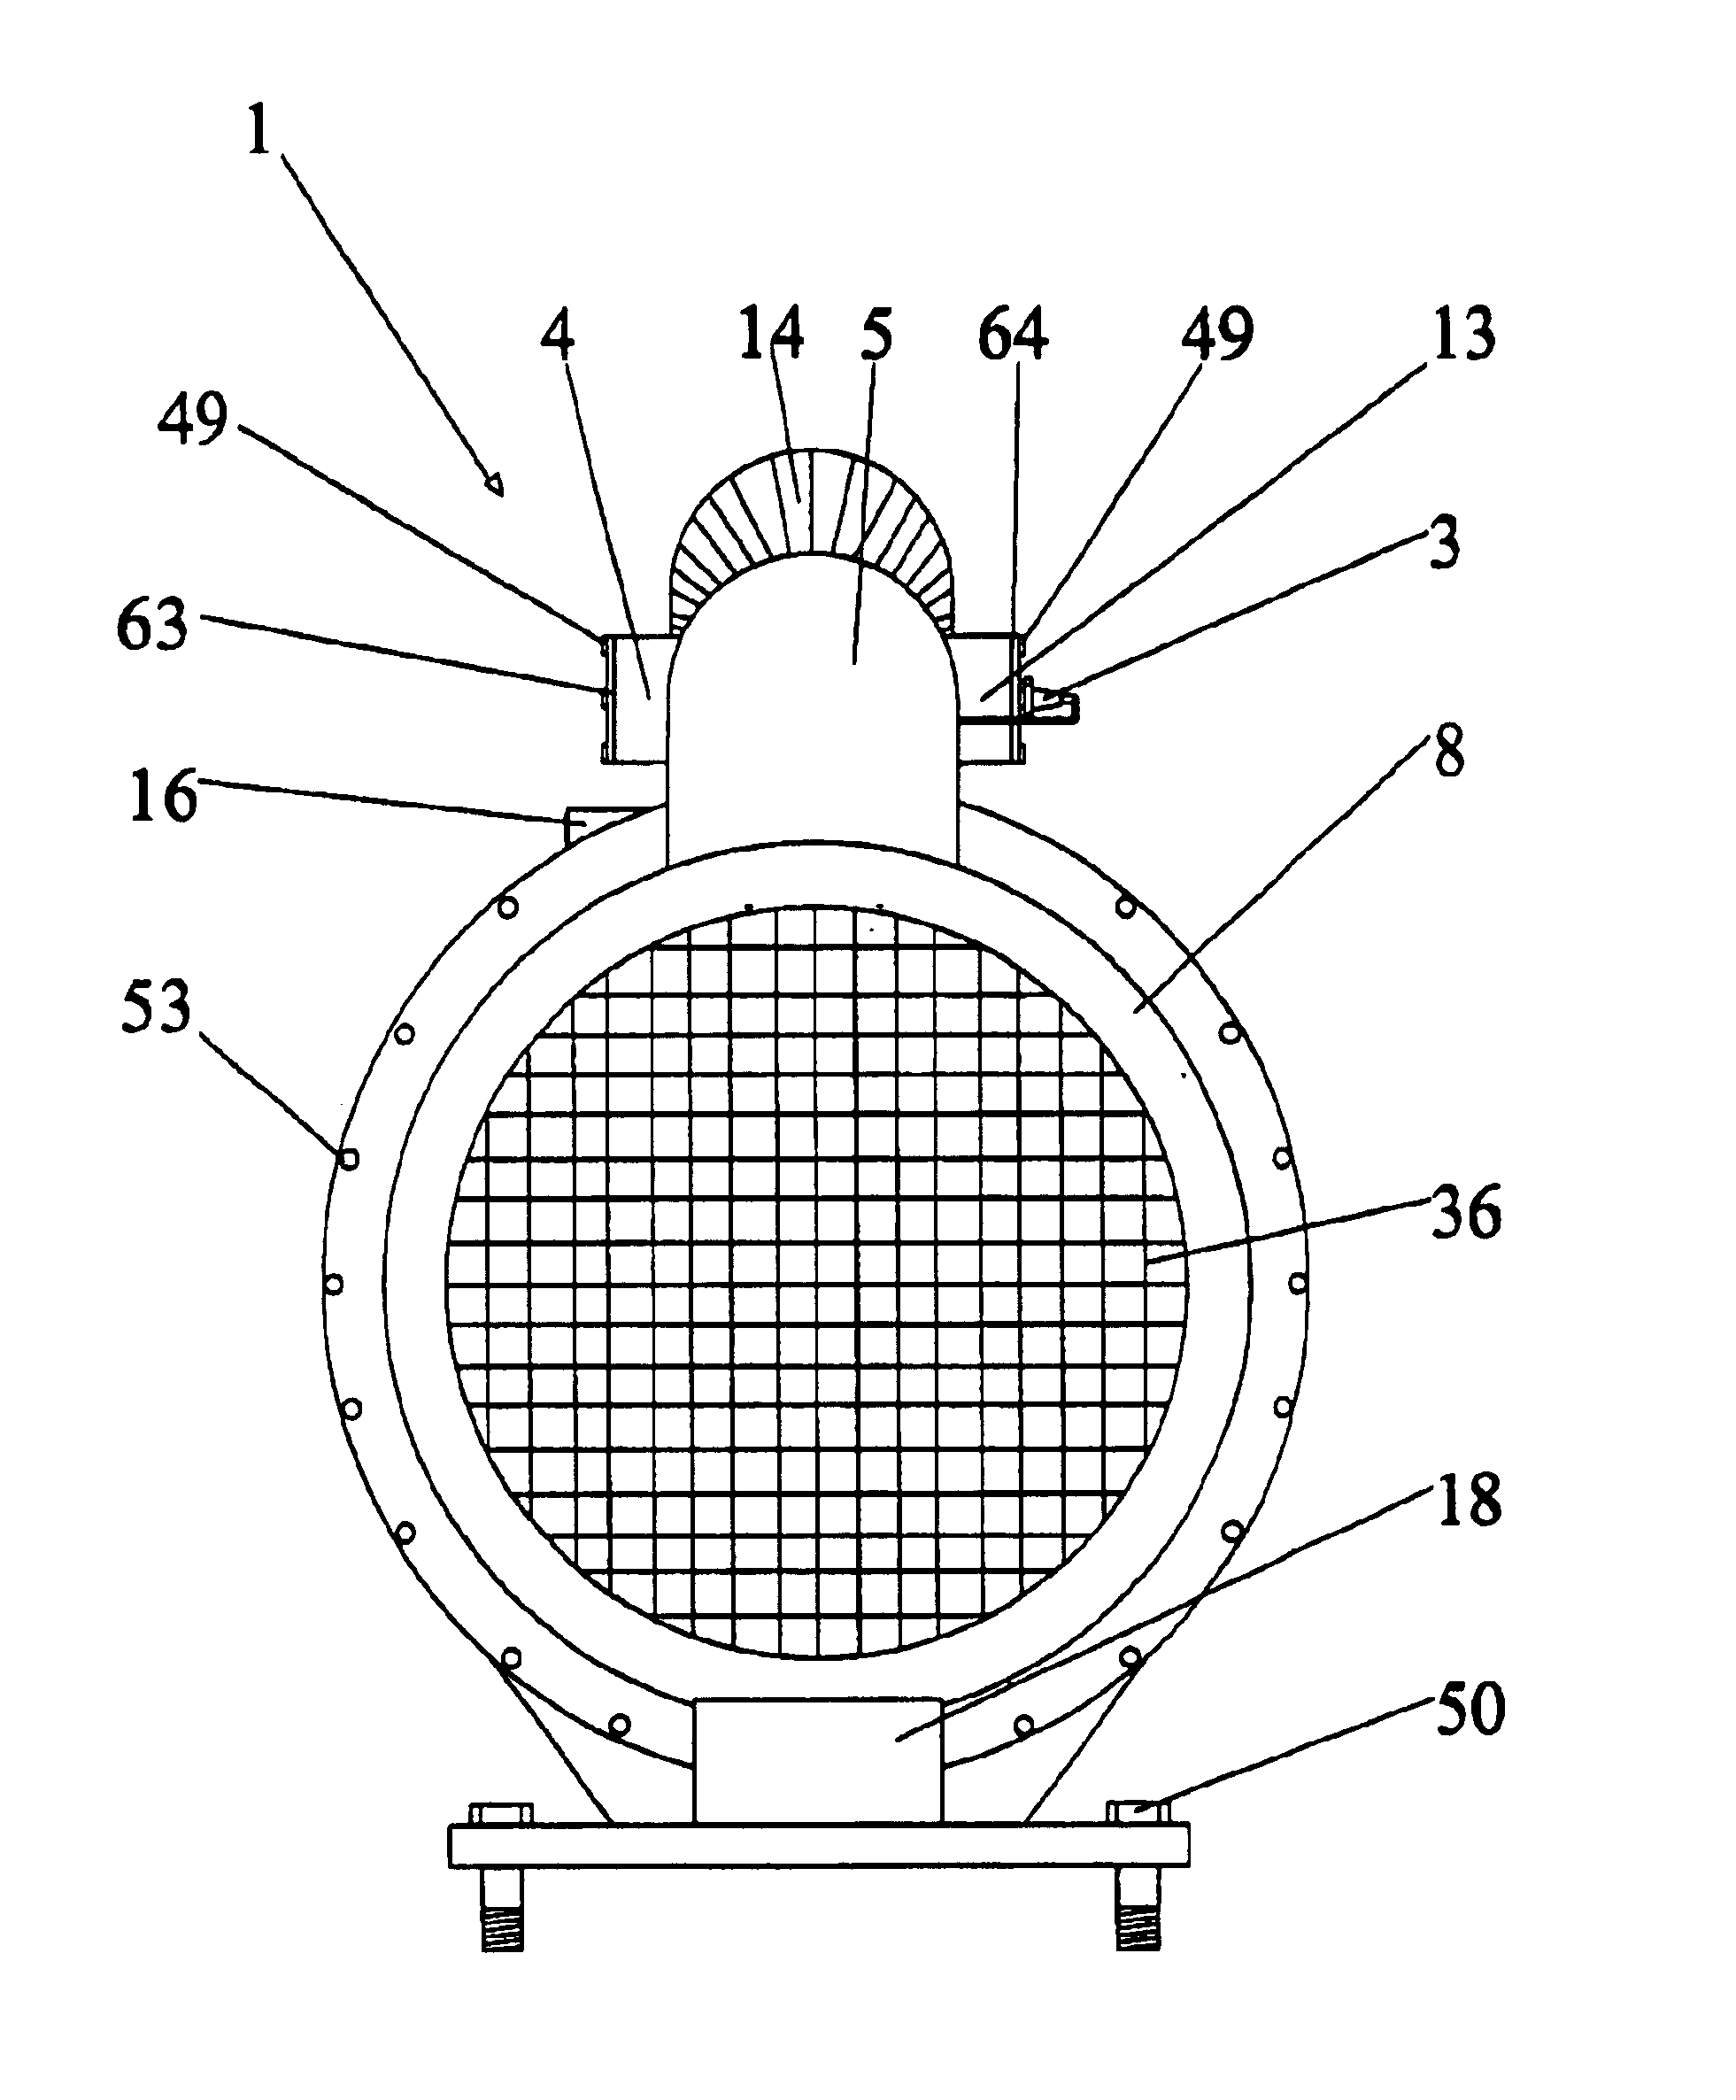 Rotary piston engine